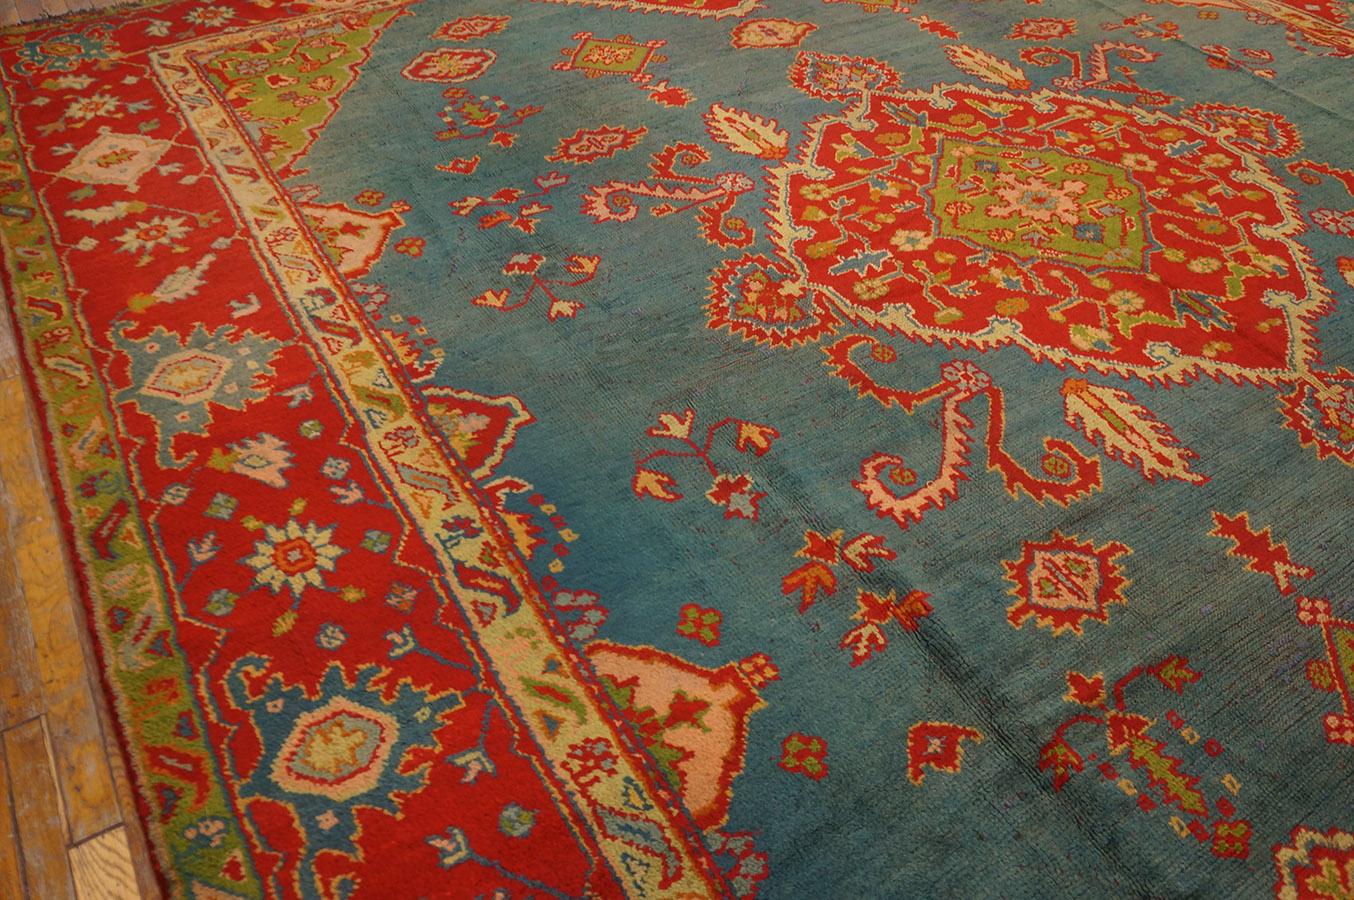 Wool Late 19th Century Turkish Oushak Carpet ( 11' 2'' x 13' 1'' - 340 x 398 cm ) For Sale